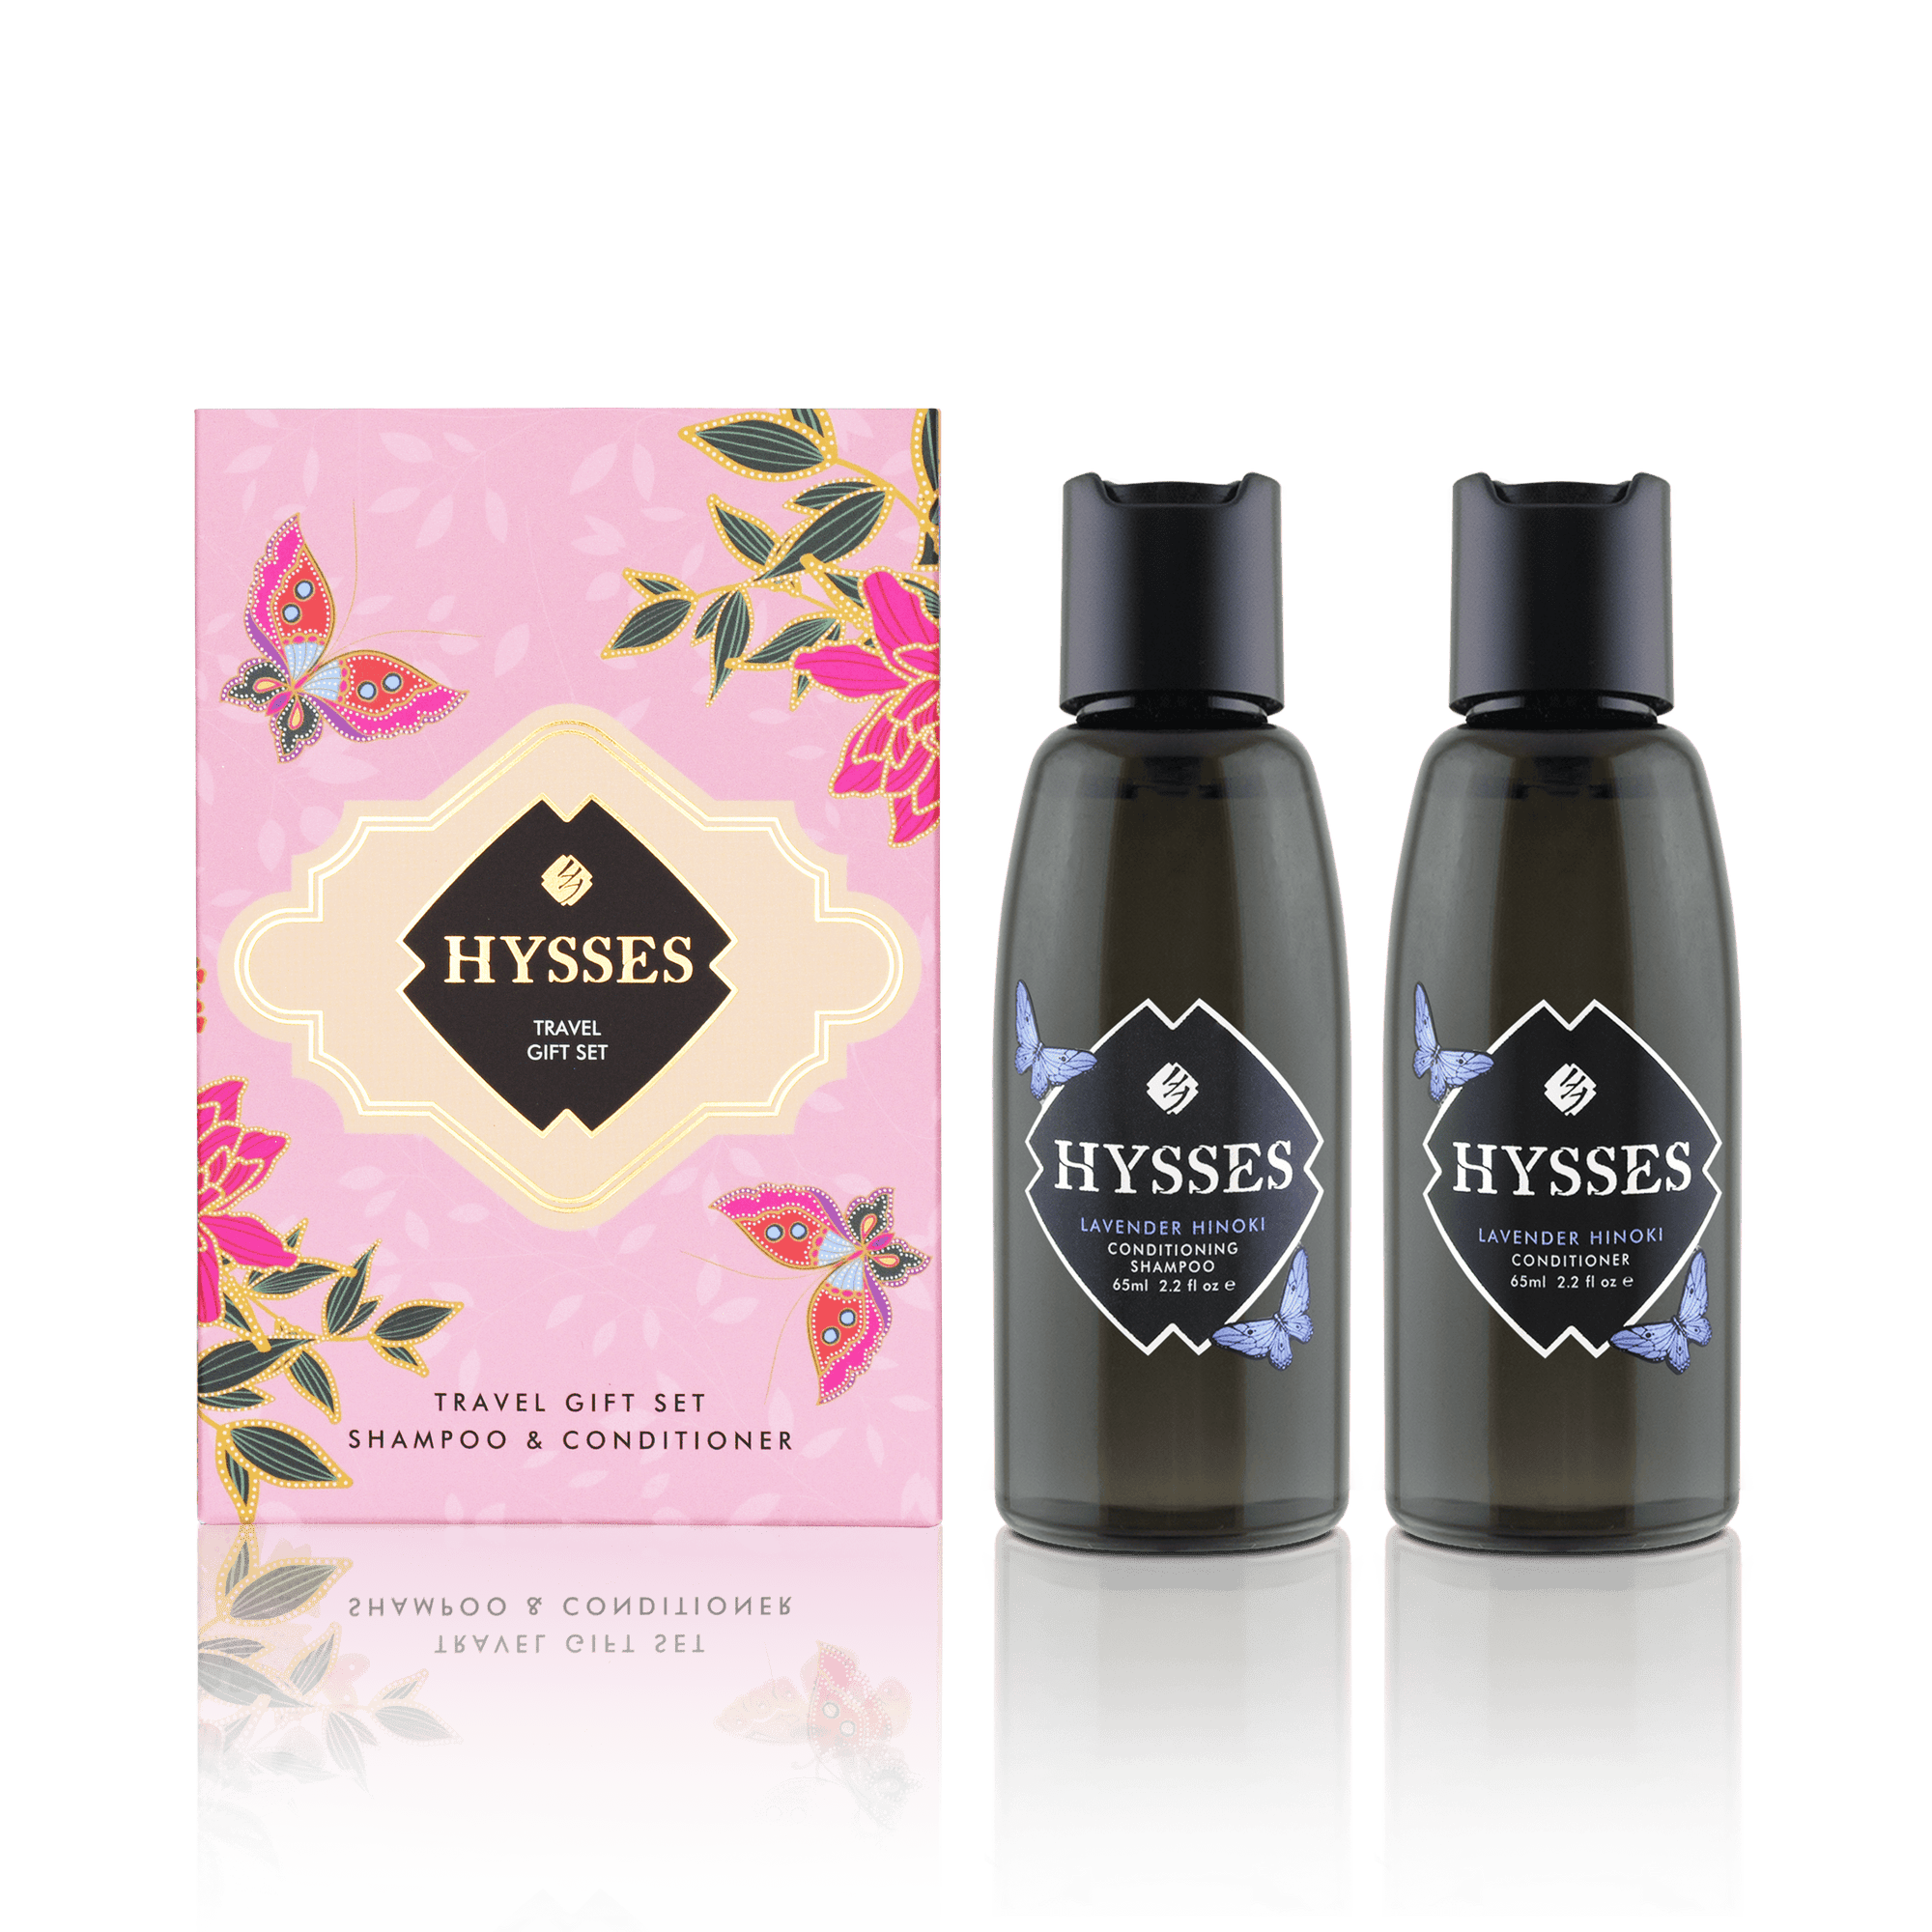 Hysses Hair Care Lavender Hinoki Travel Gift Set (Shampoo & Conditioner)